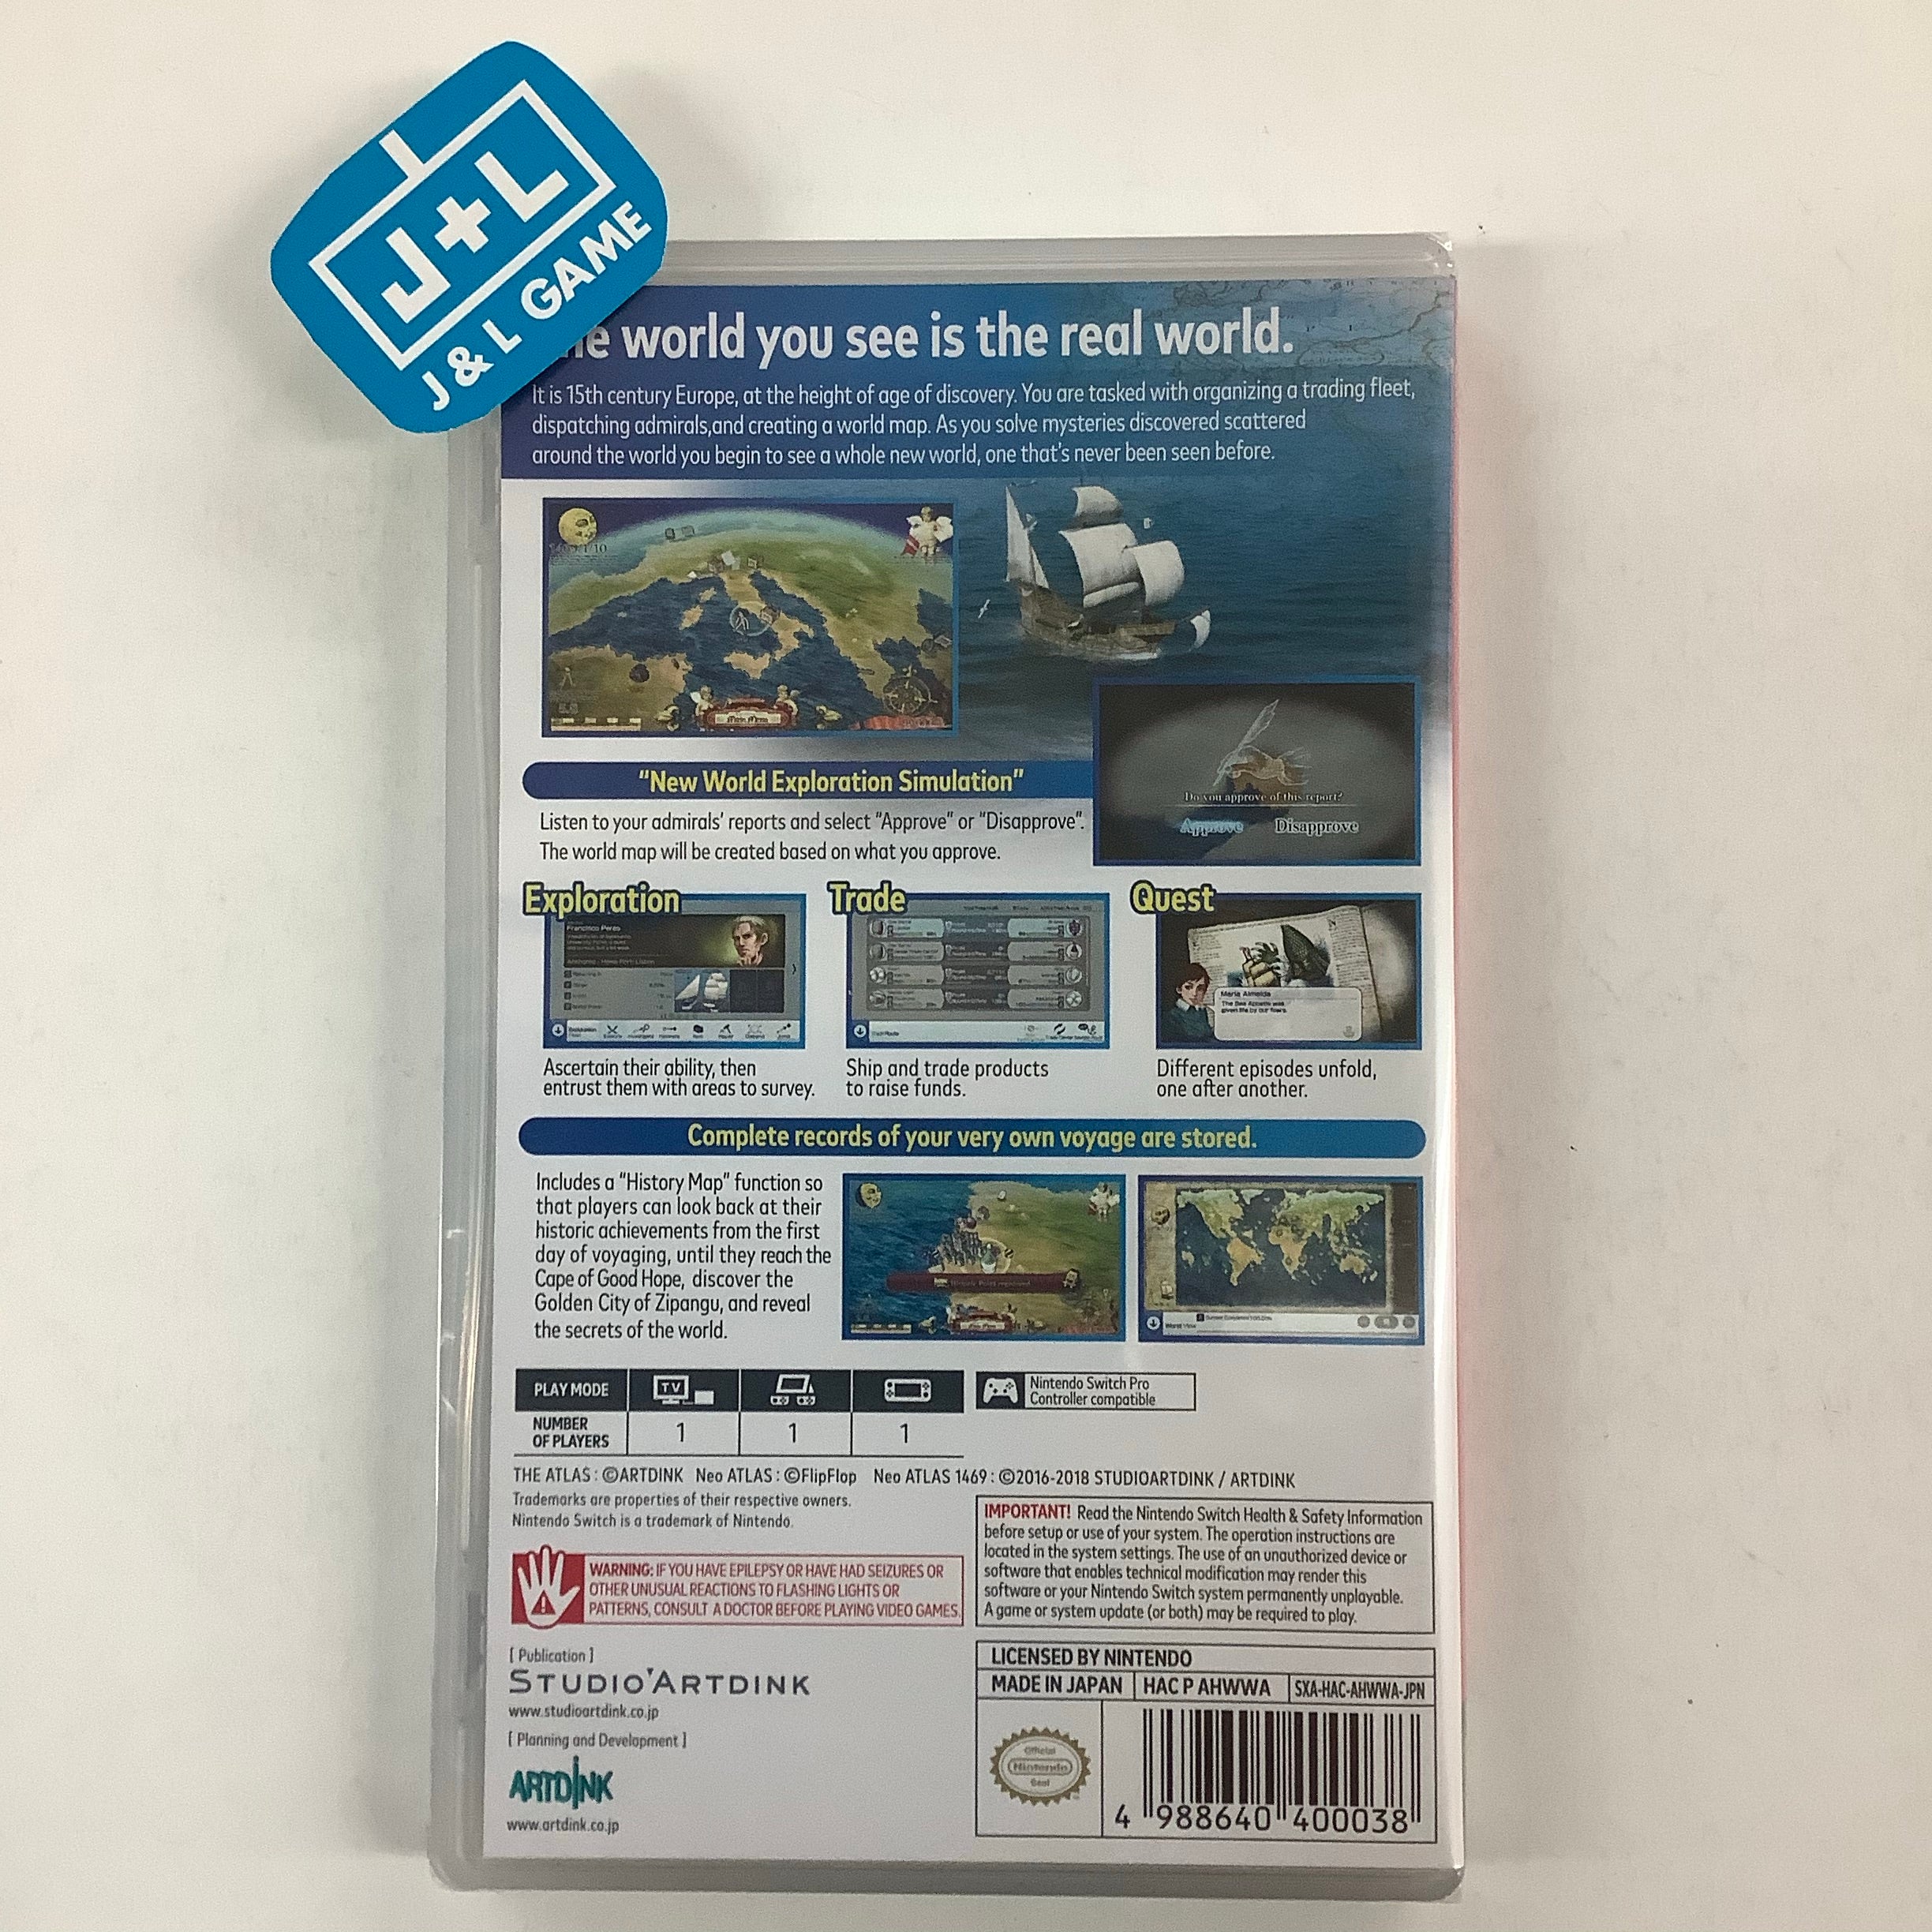 Neo Atlas 1469 - (NSW) Nintendo Switch (Japanese Import) Video Games Artdink   